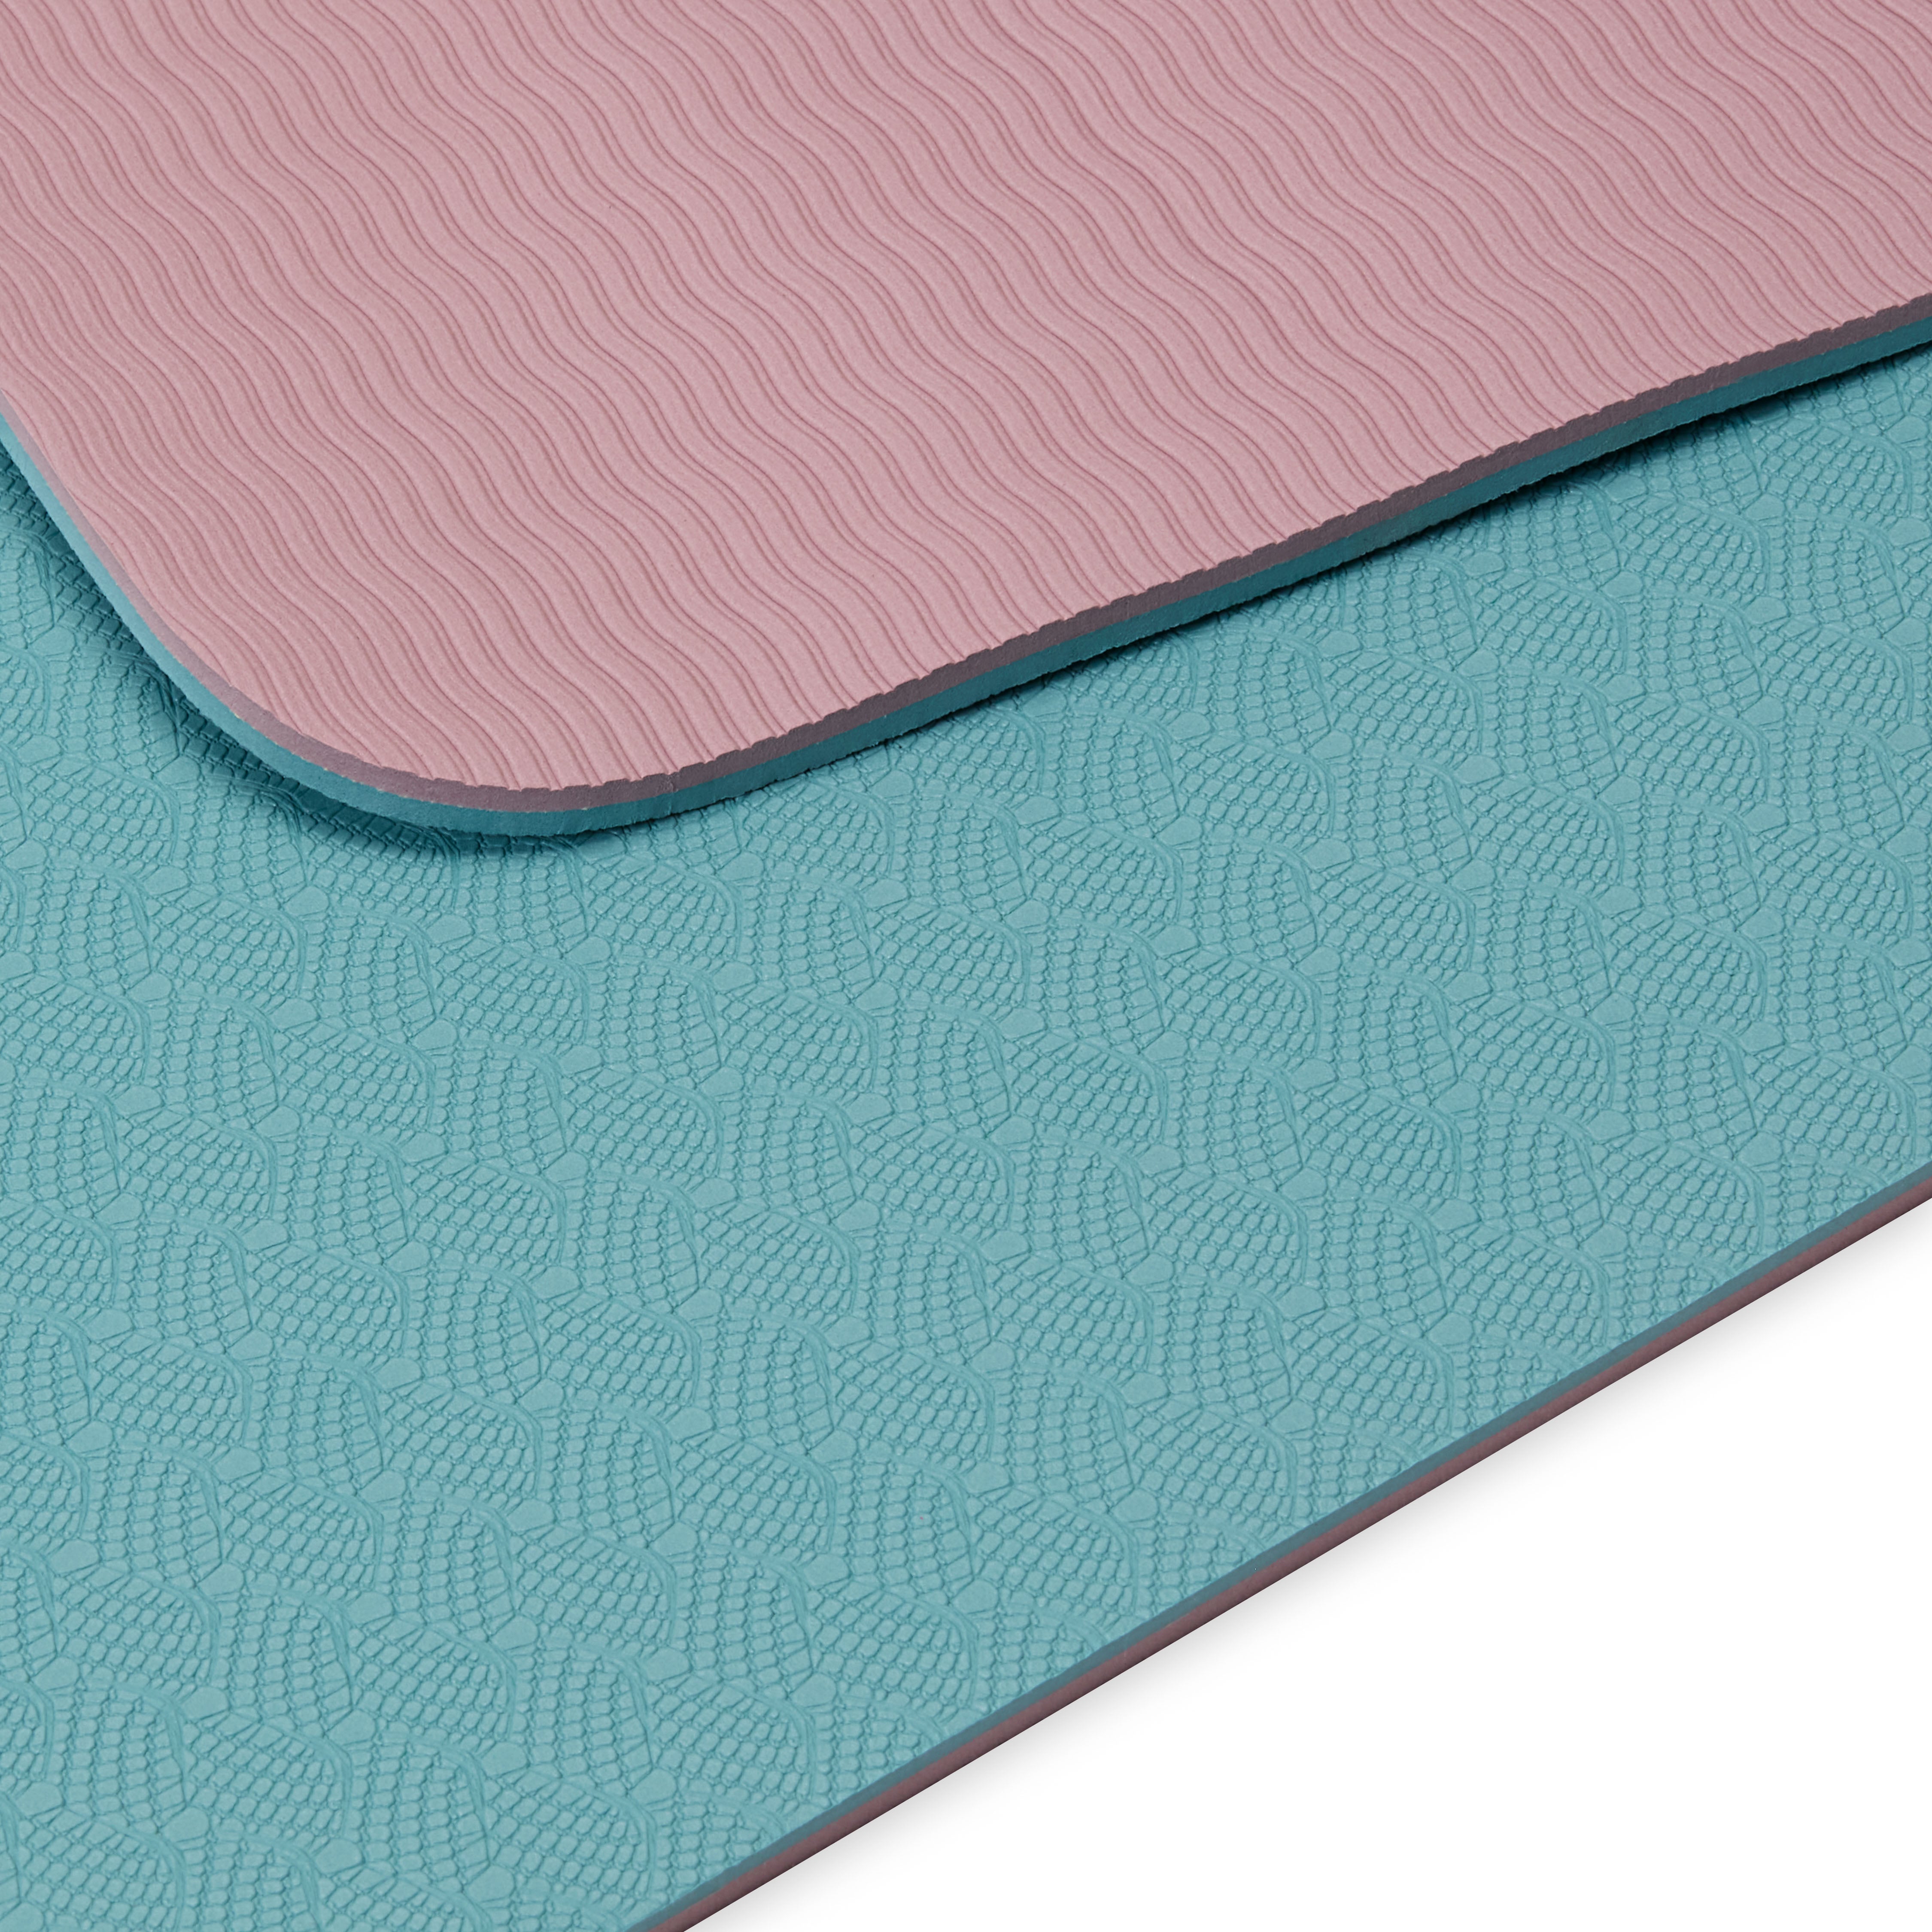 Gaiam Performance Yoga Mat (6mm) Seafoam/Dusty Pink both sides closeup